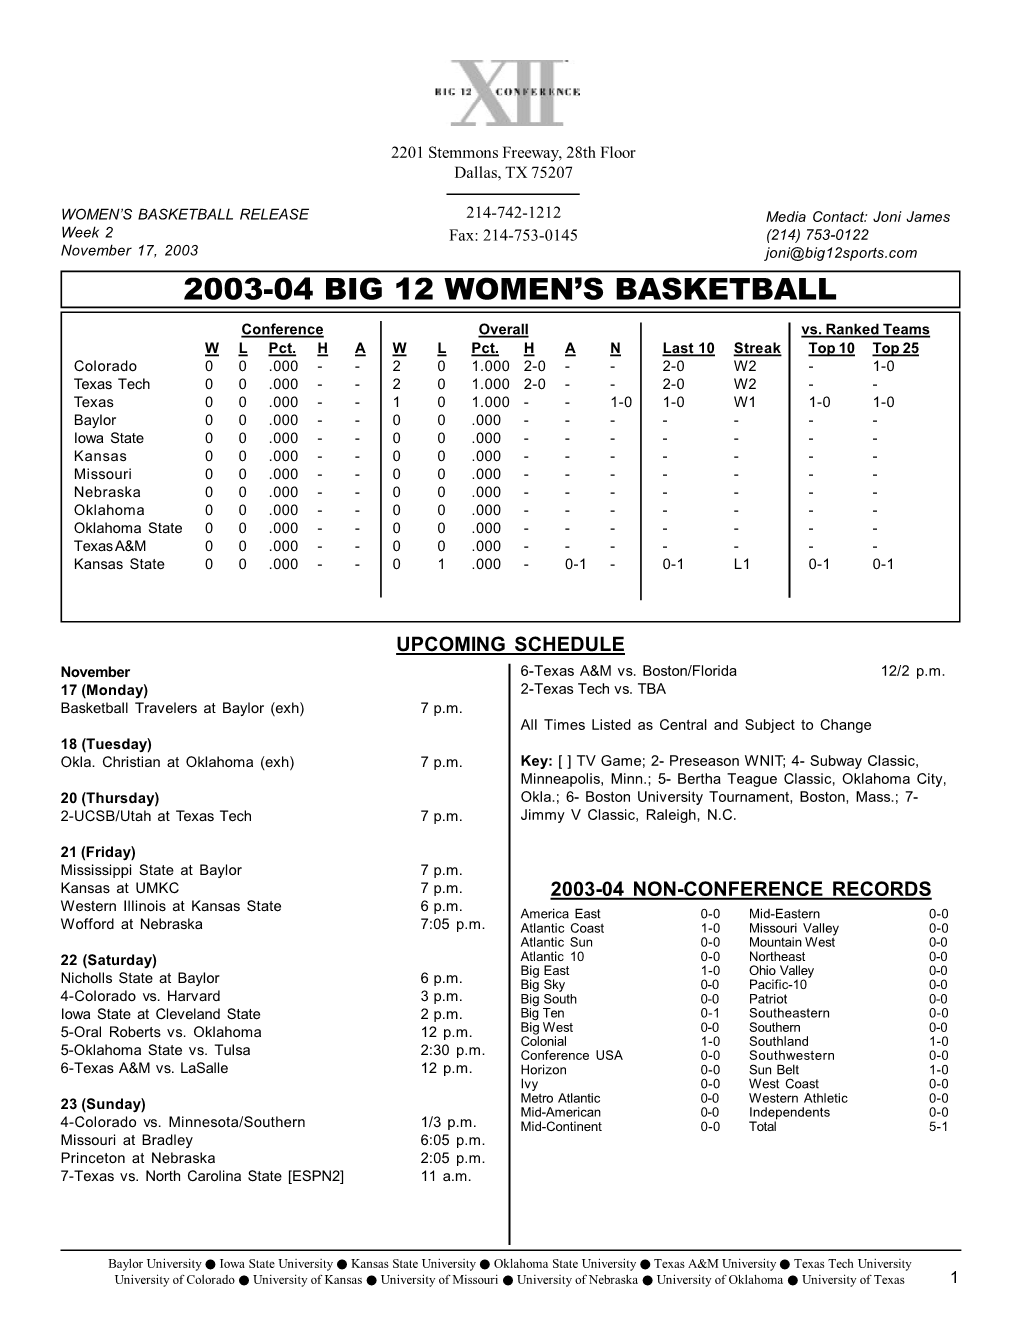 2003-04 Big 12 Women's Basketball